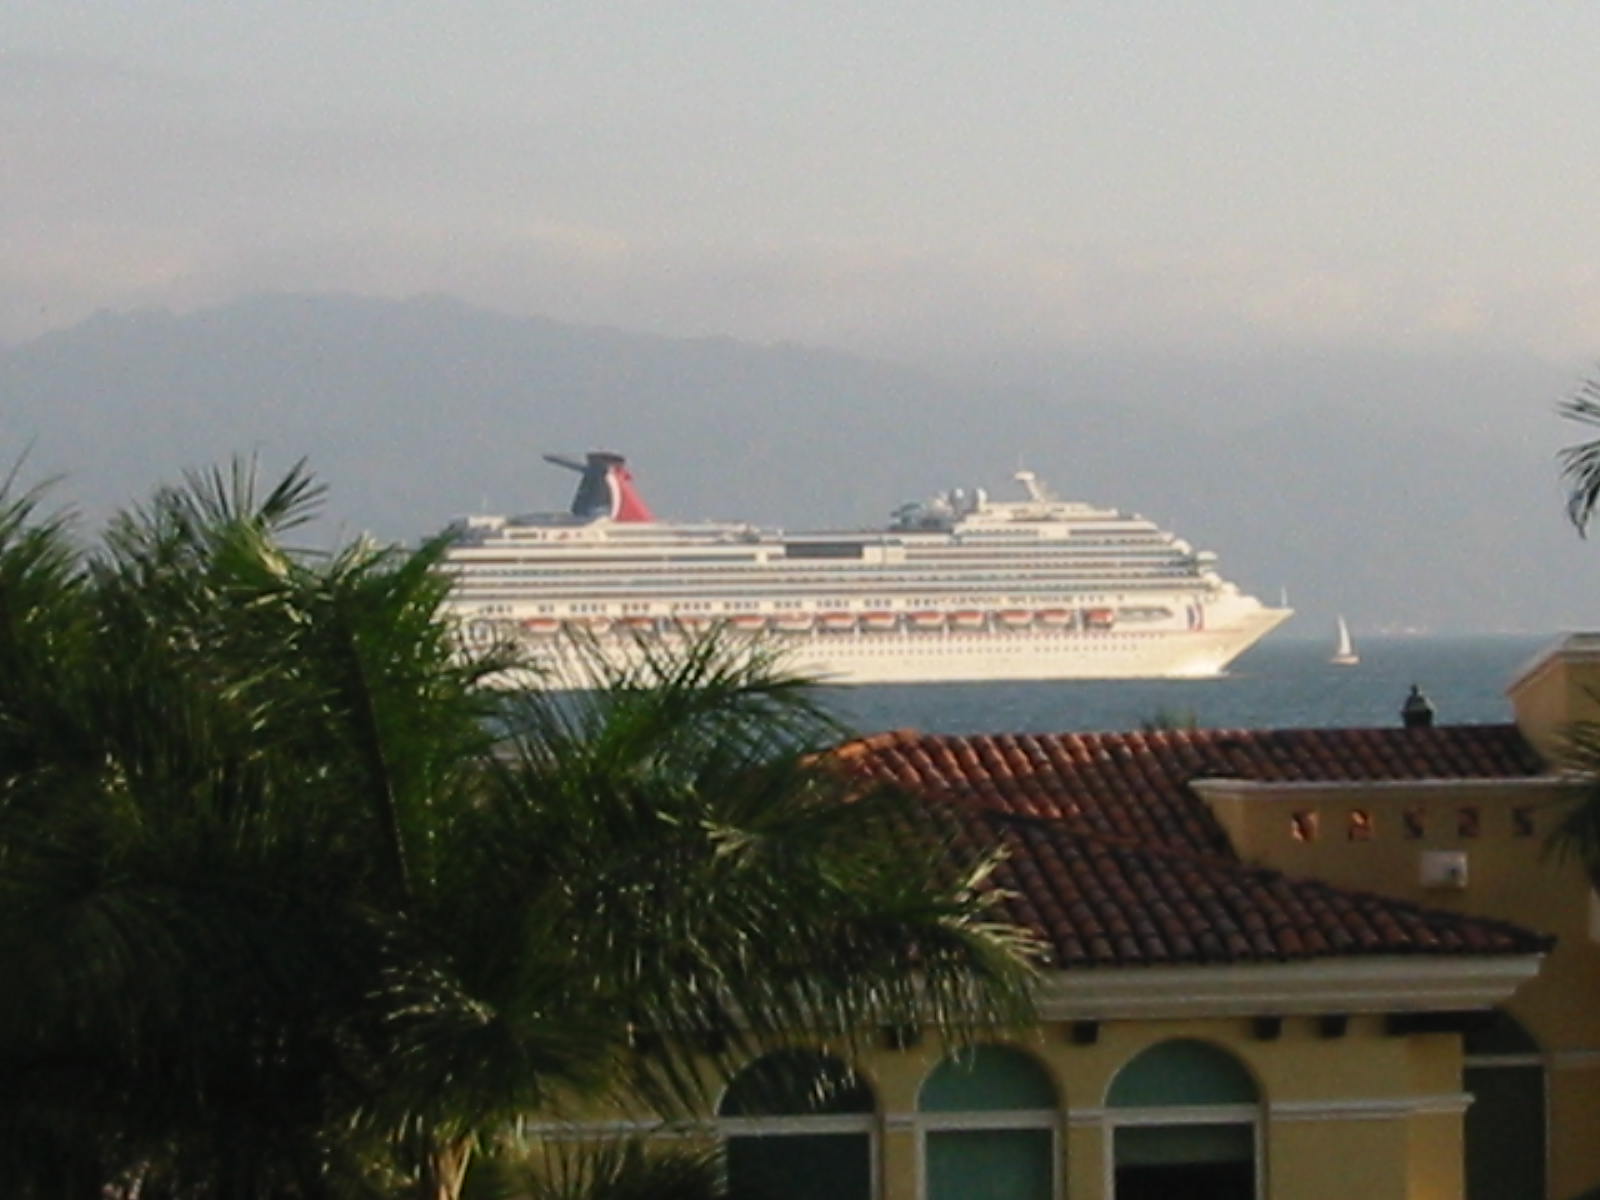 Puerto Vallarta - cruise ship leaving PV